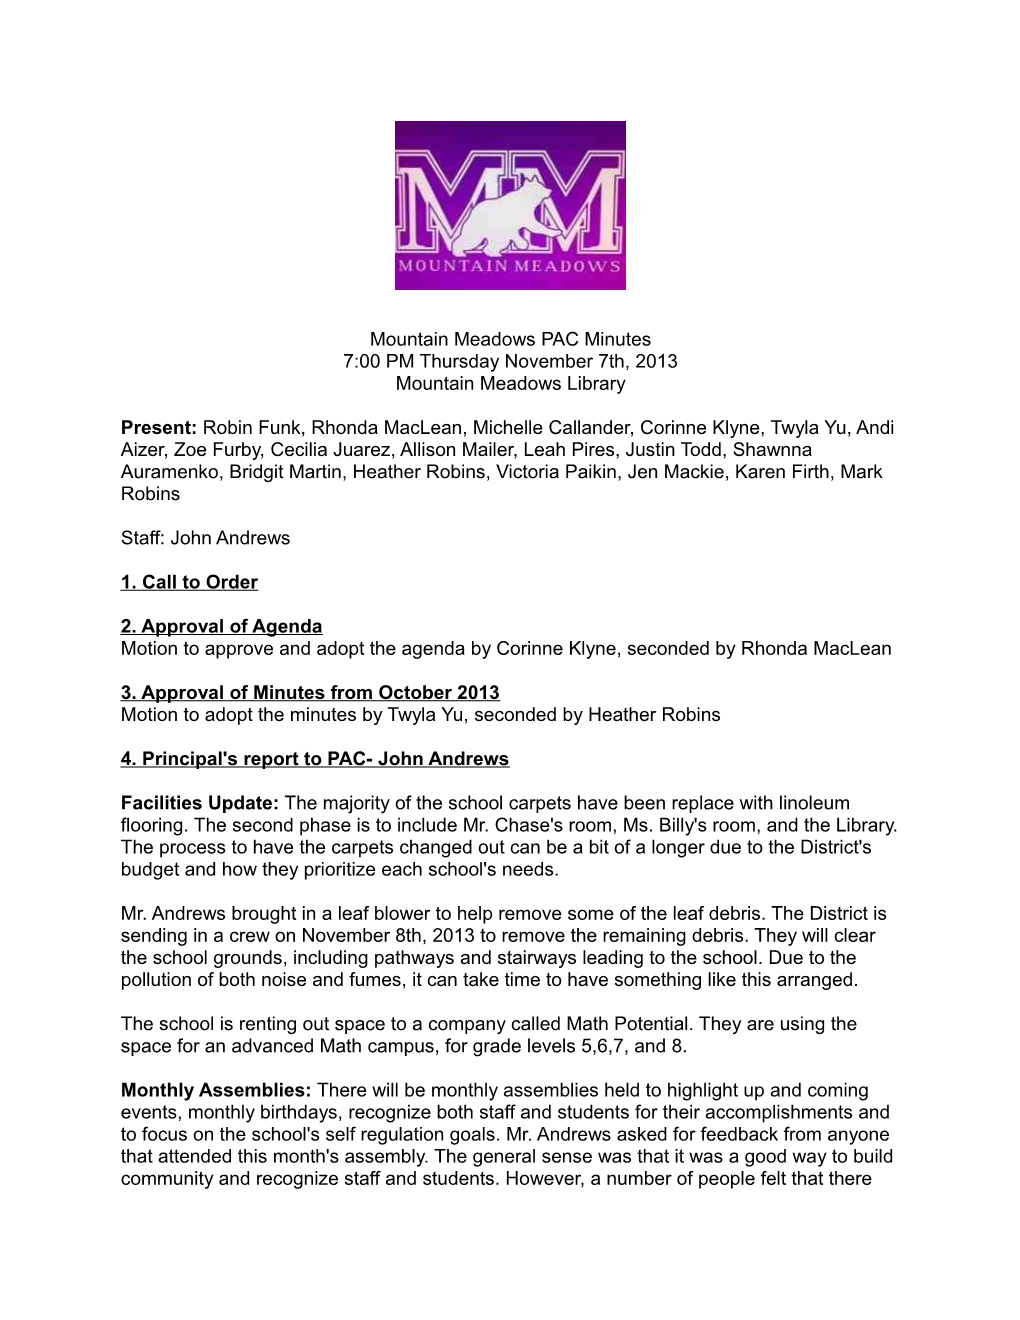 Mountain Meadows PAC Minutes Nov2013